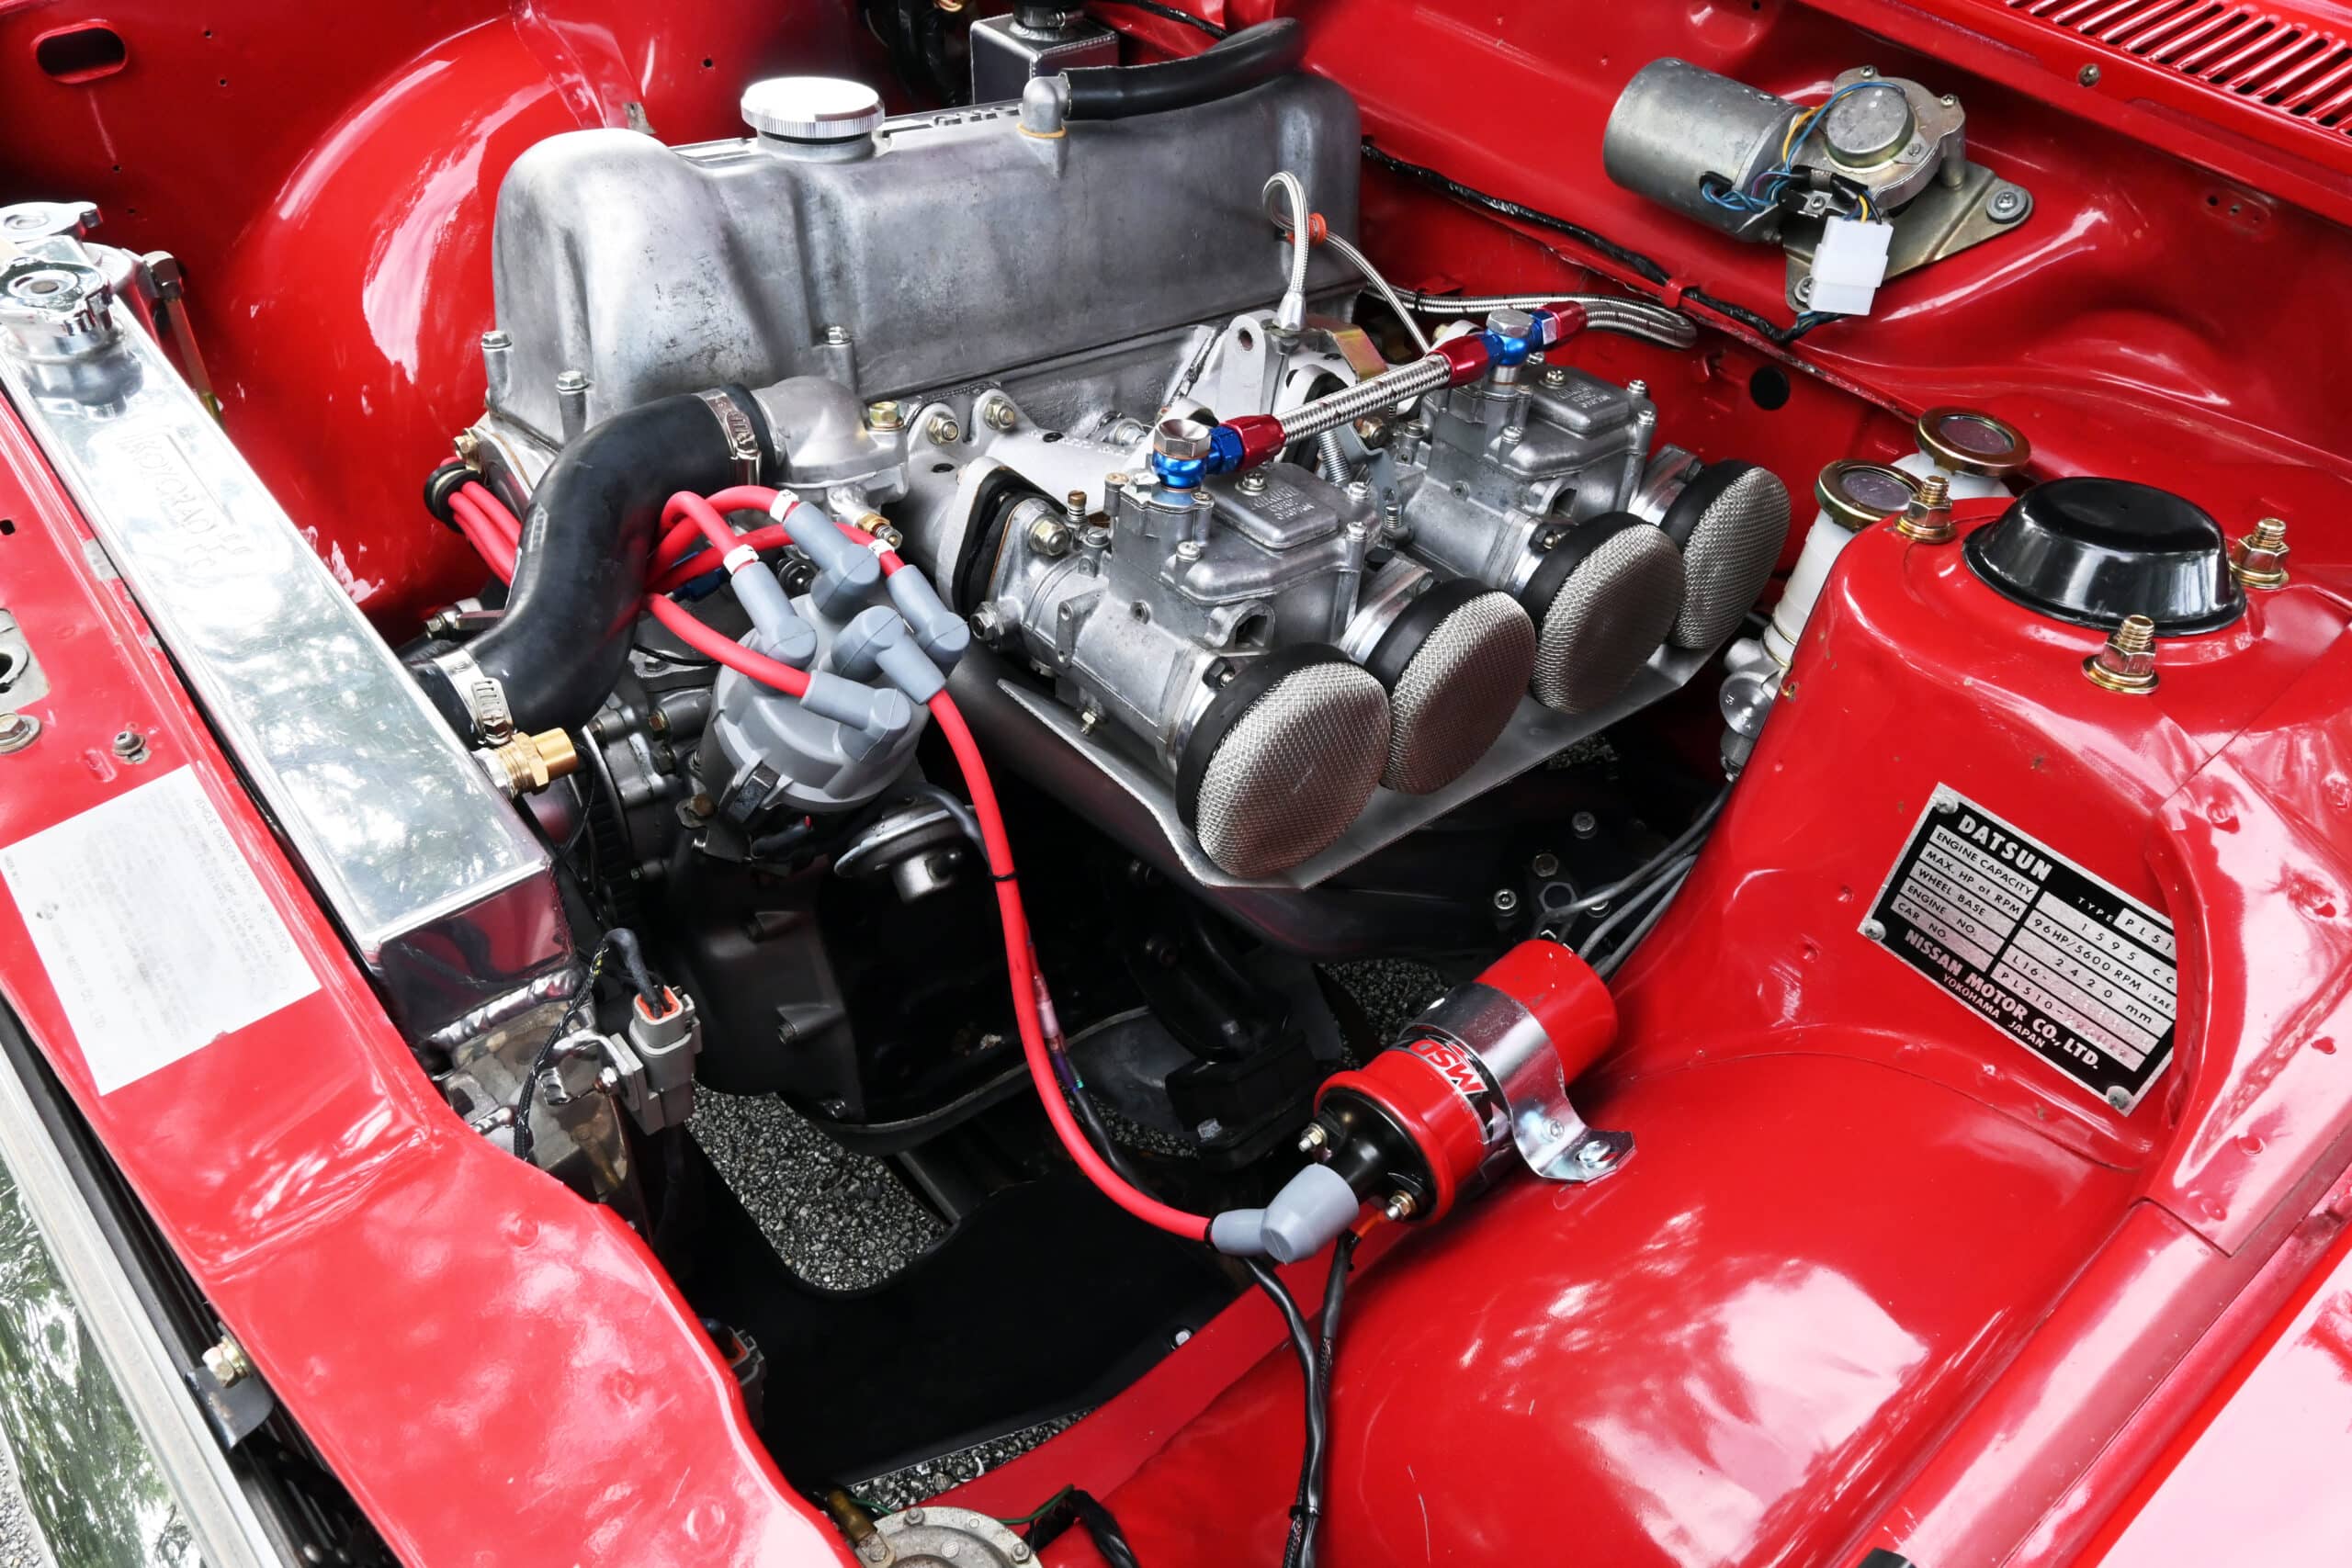 1971 Datsun 510, Extensive performance-oriented restoration Rebello built 2.4L stroker, 5-speed, LSD, Watanabe wheels, Mikuni Side Draft Carburetors, California Car.